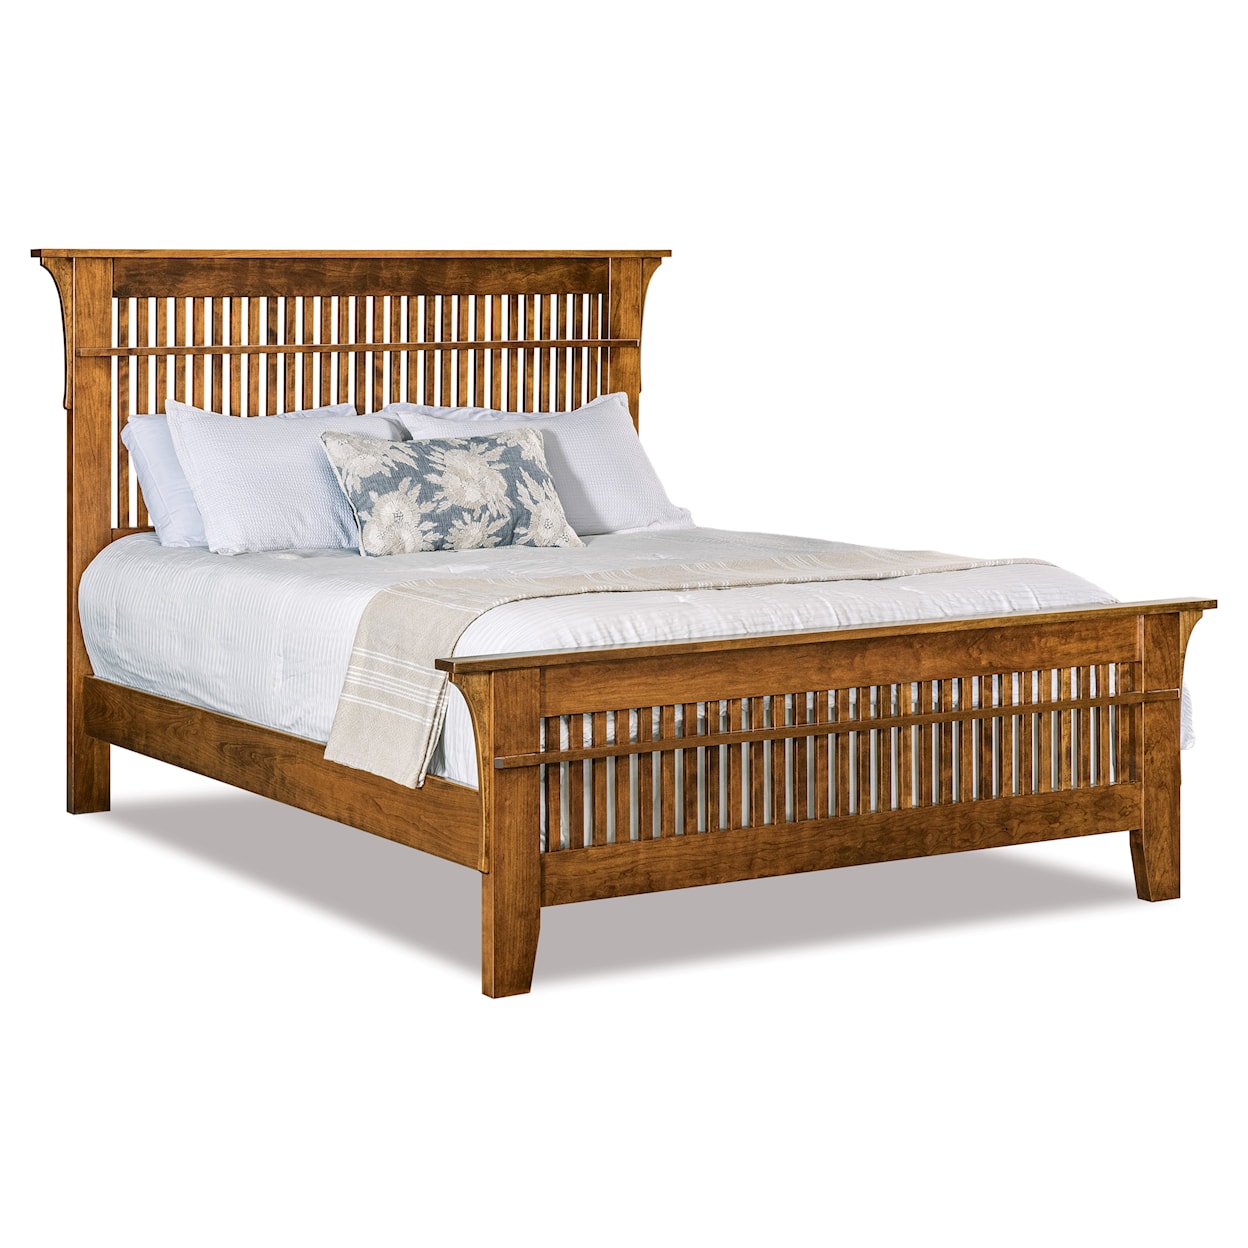 Archbold Furniture Bob Timberlake Queen Arts & Crafts Bed